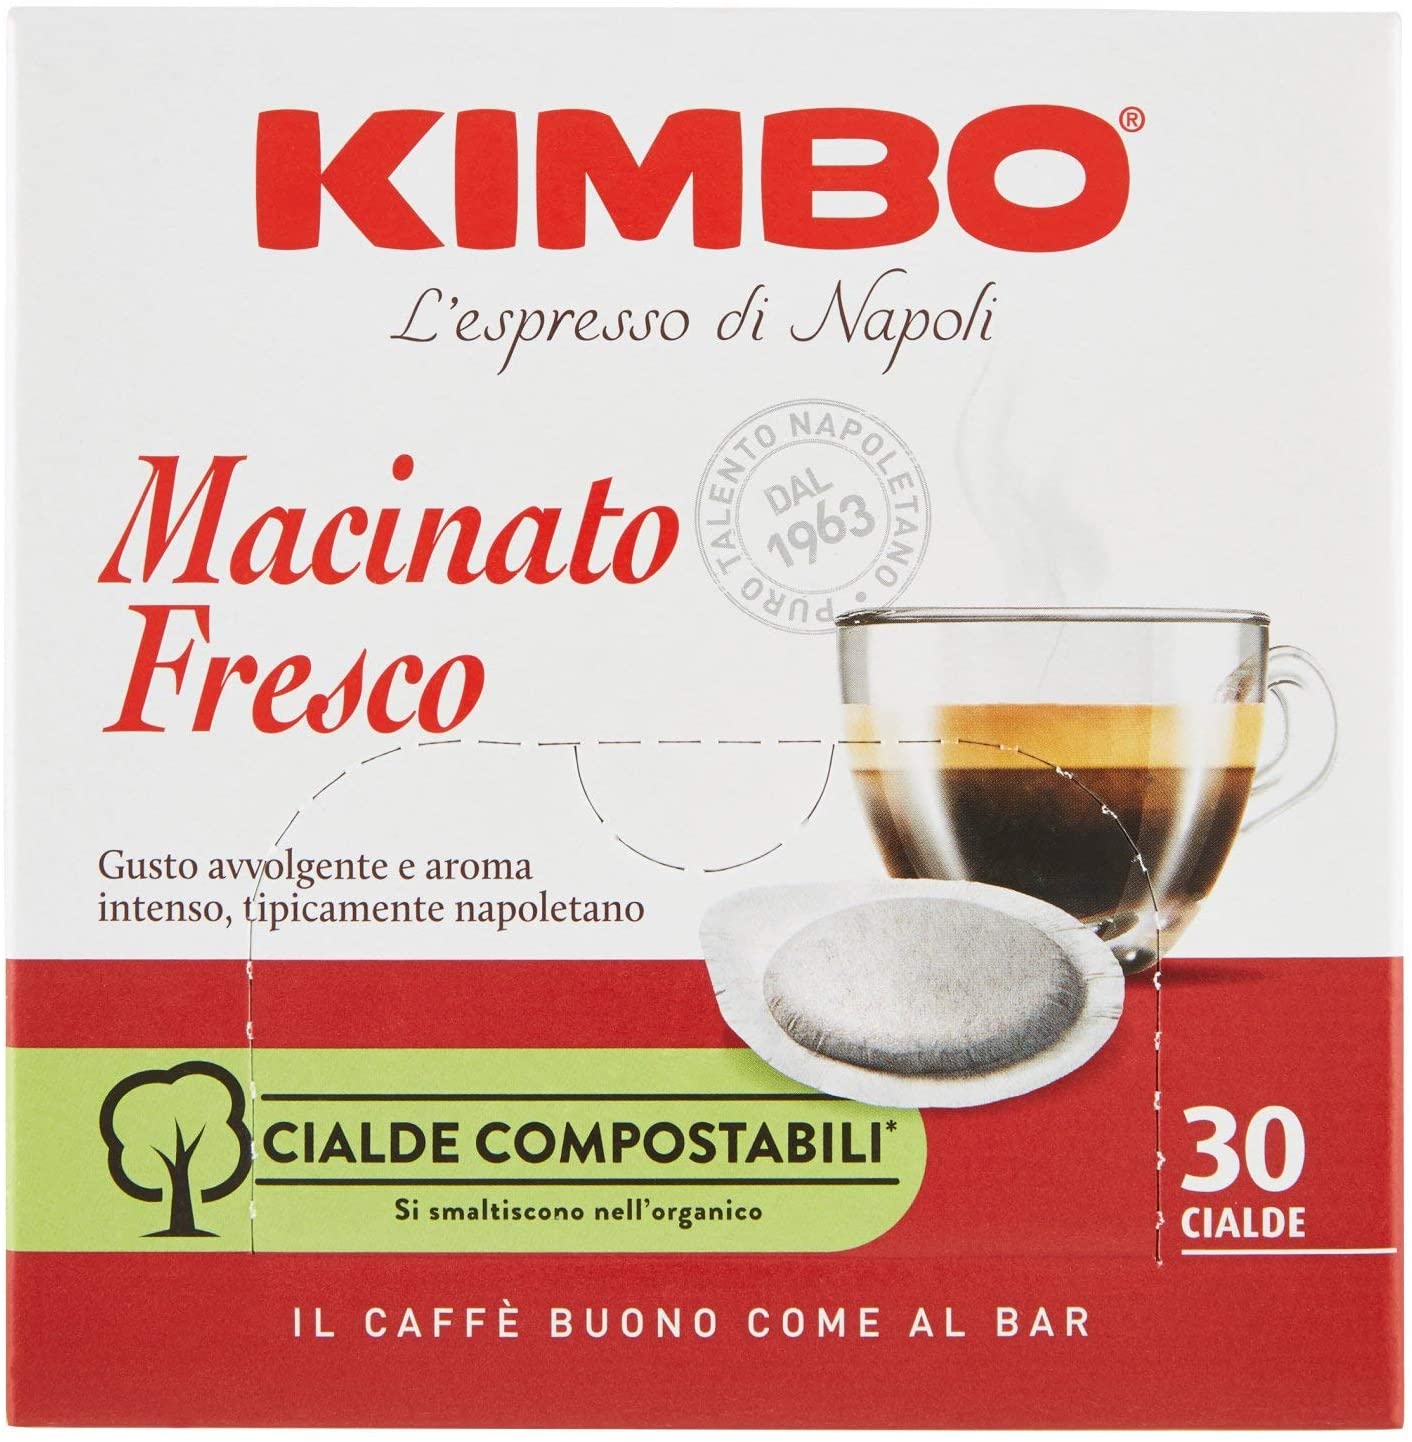 Caffè: Kimbo “coffee macinato fresco” 50 Pods 350gr (12.34 oz